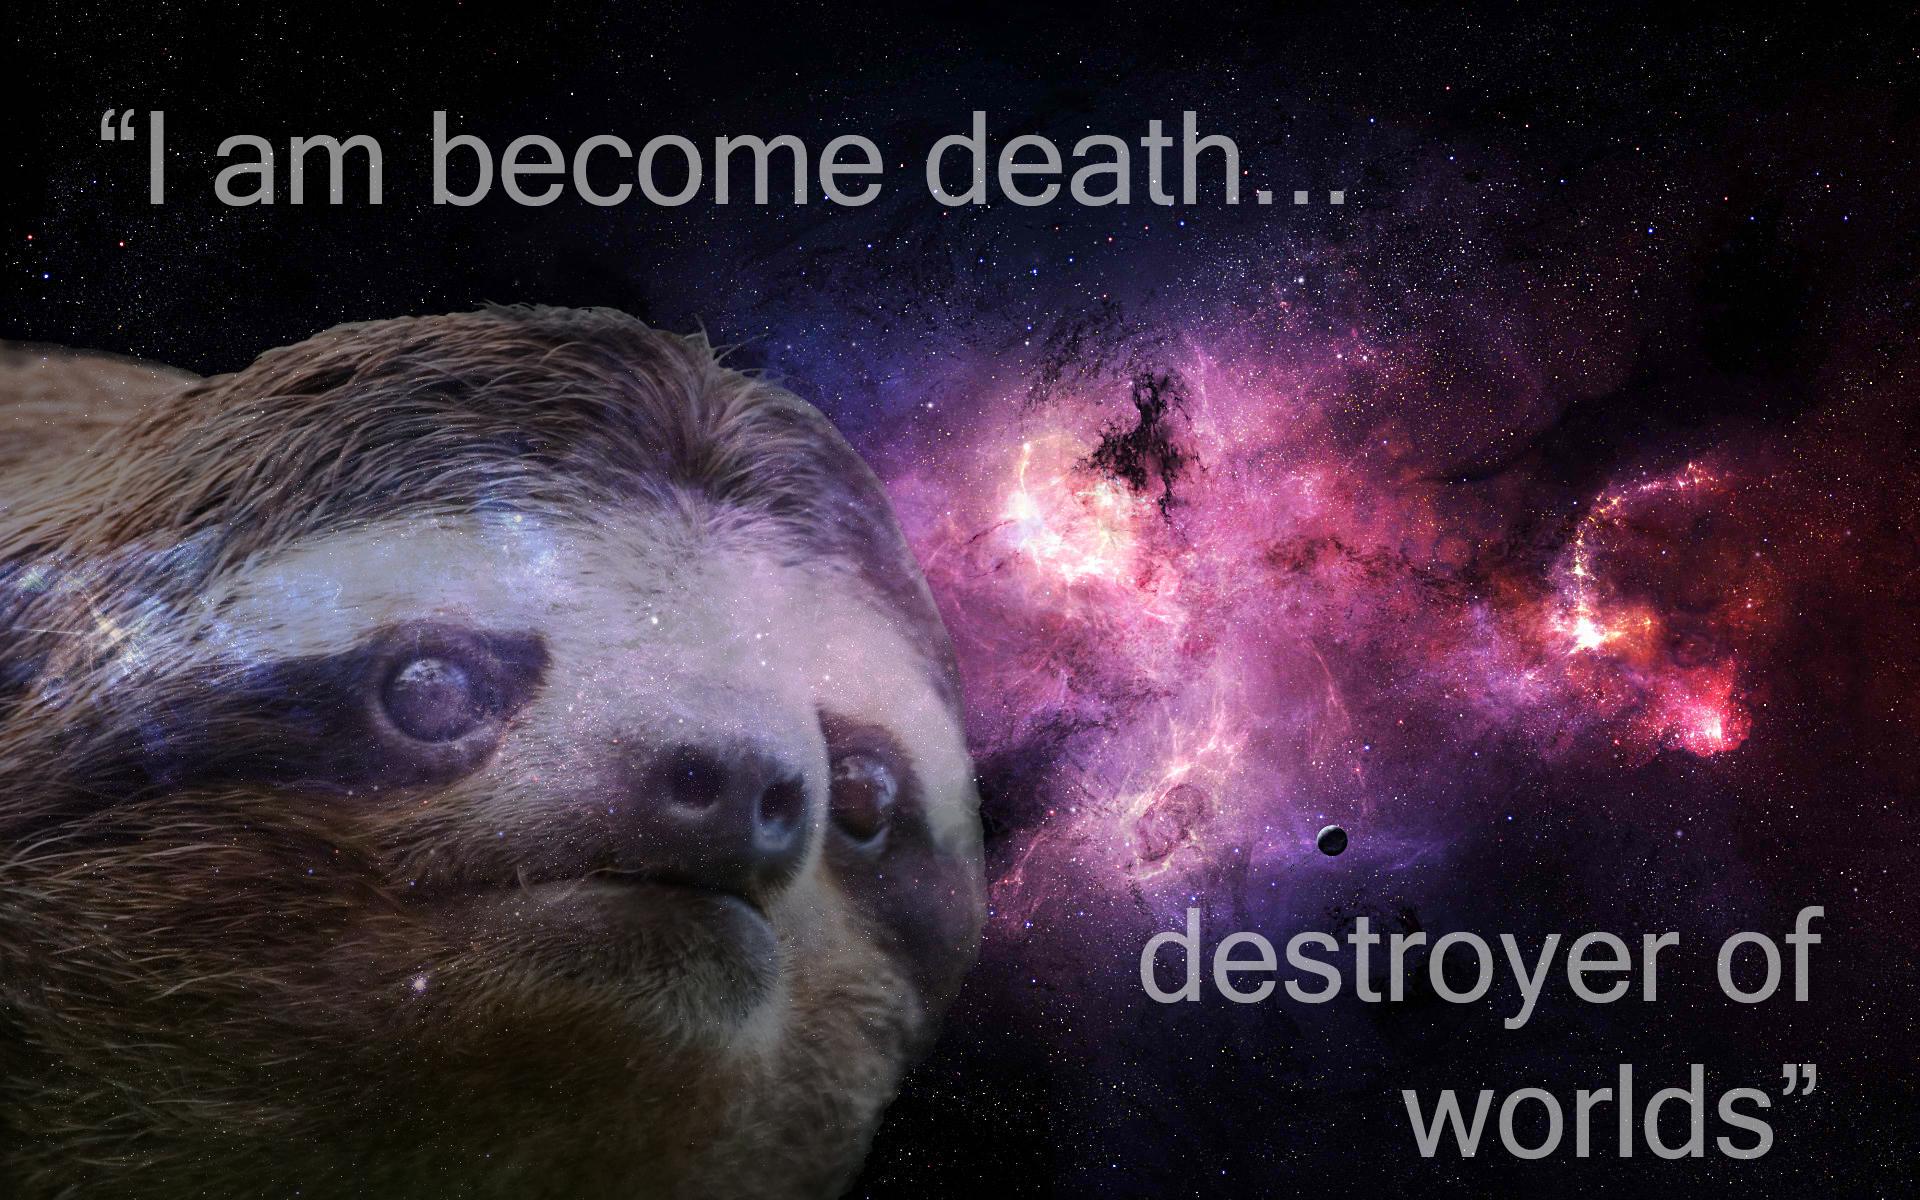 Sloth Death Nebula WTF wallpaper 1920x1200 167040 WallpaperUP